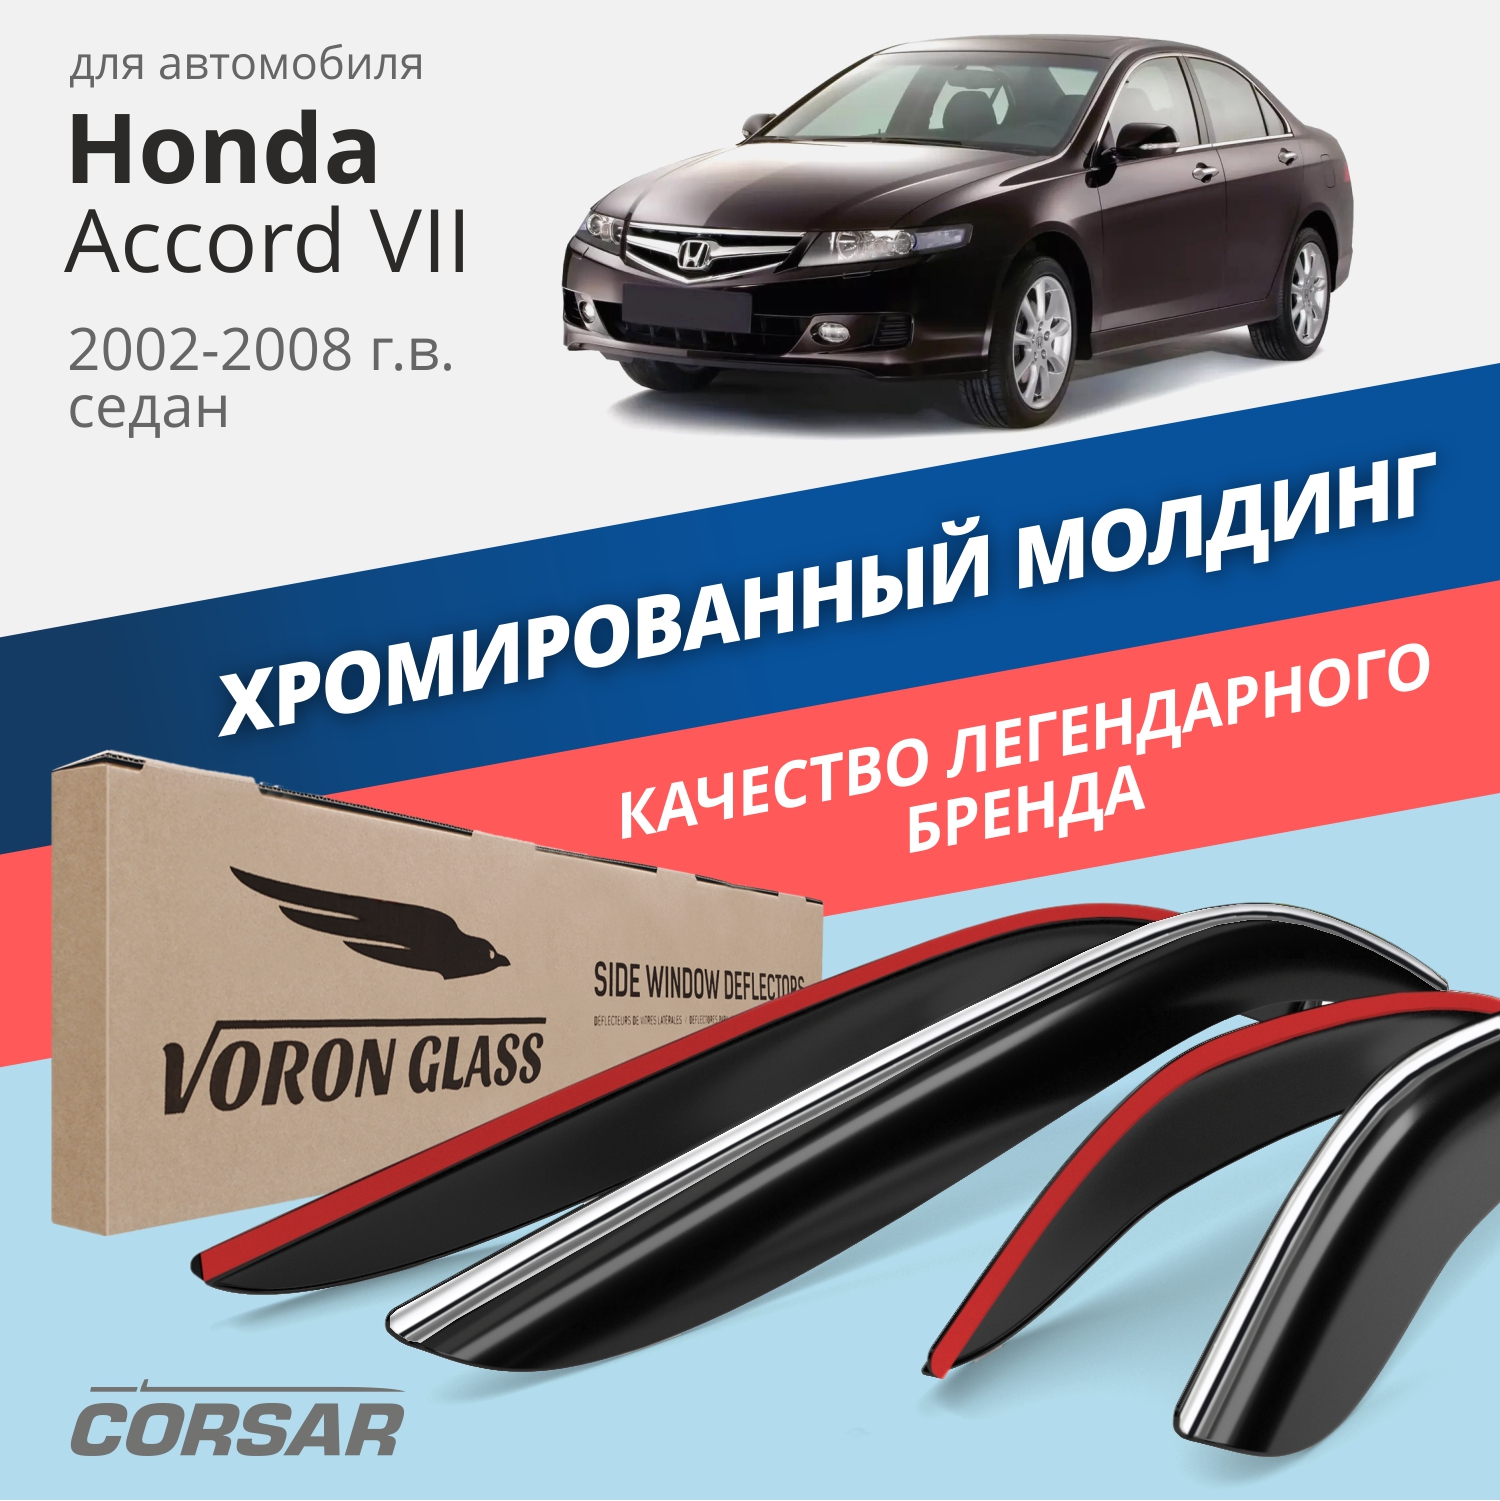 Дефлекторы Voron Glass CORSAR Honda Accord VII 2002-2008 г.в. седан, хром молдинг